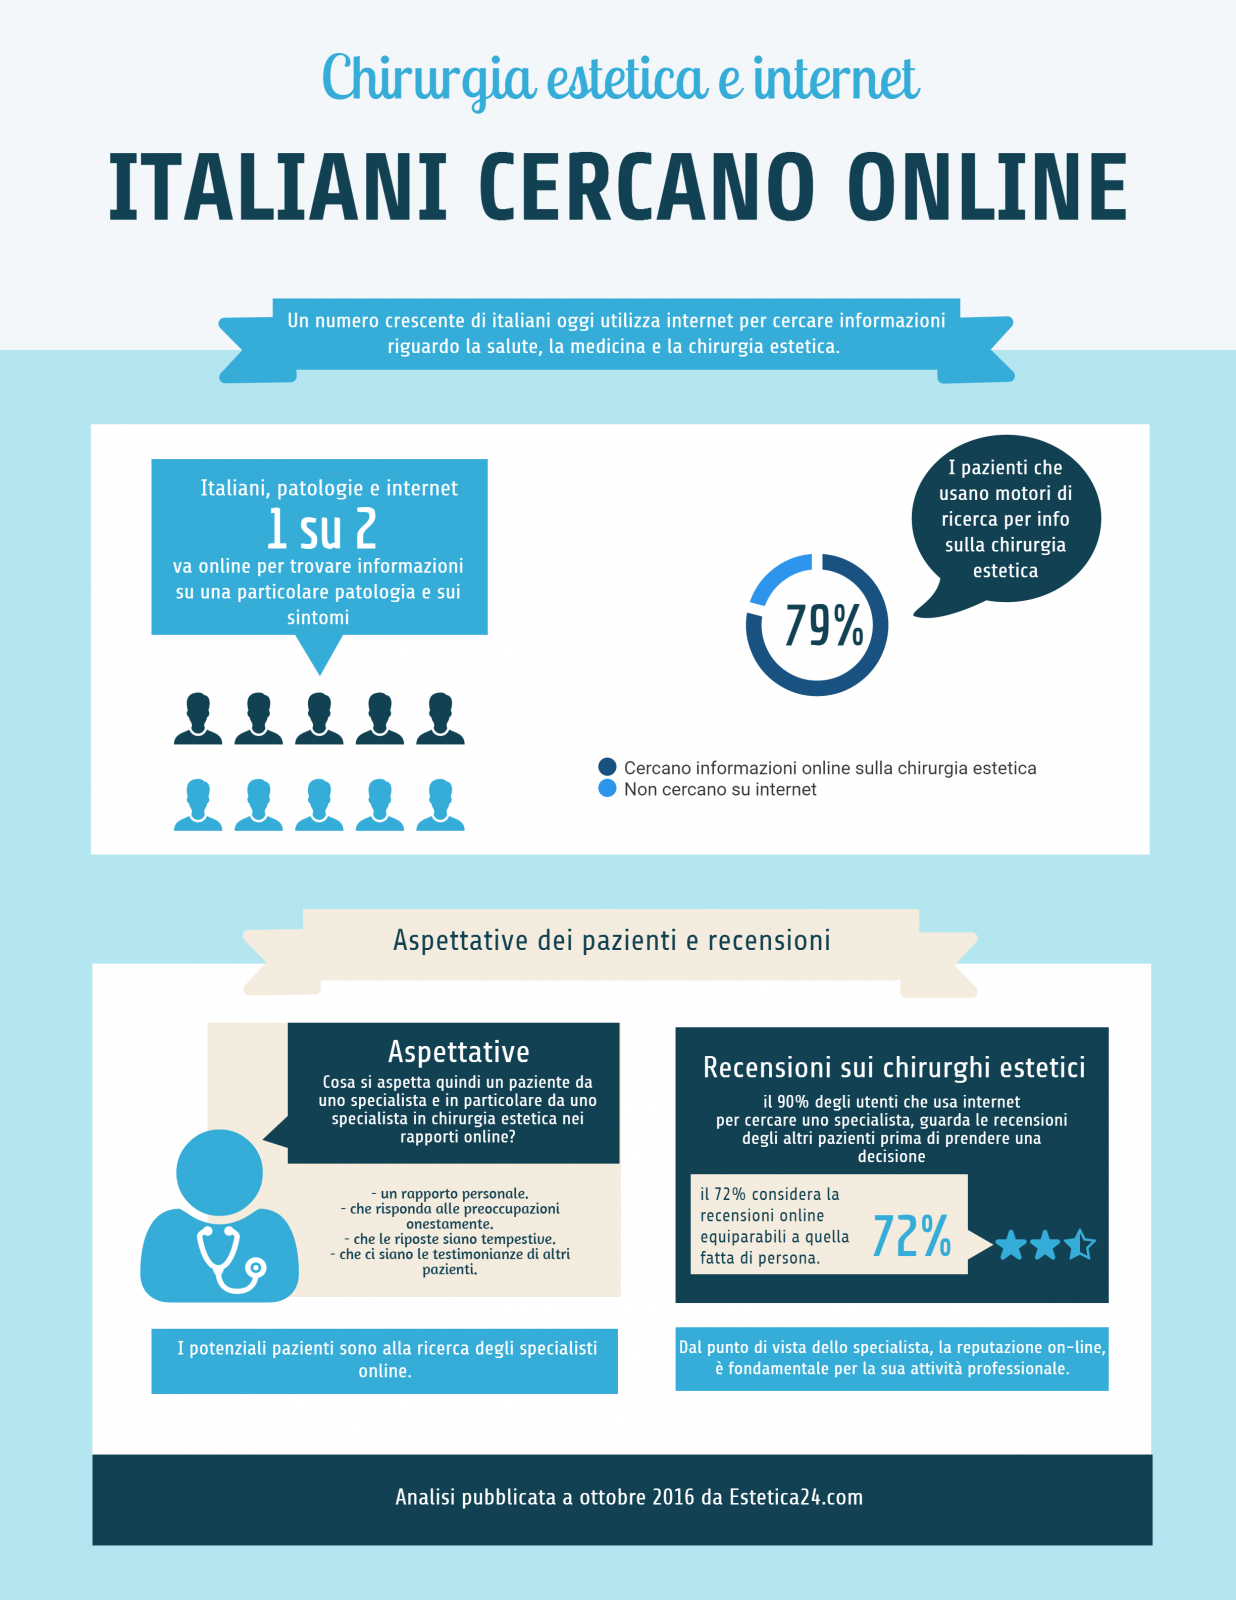 Italiani cercano online